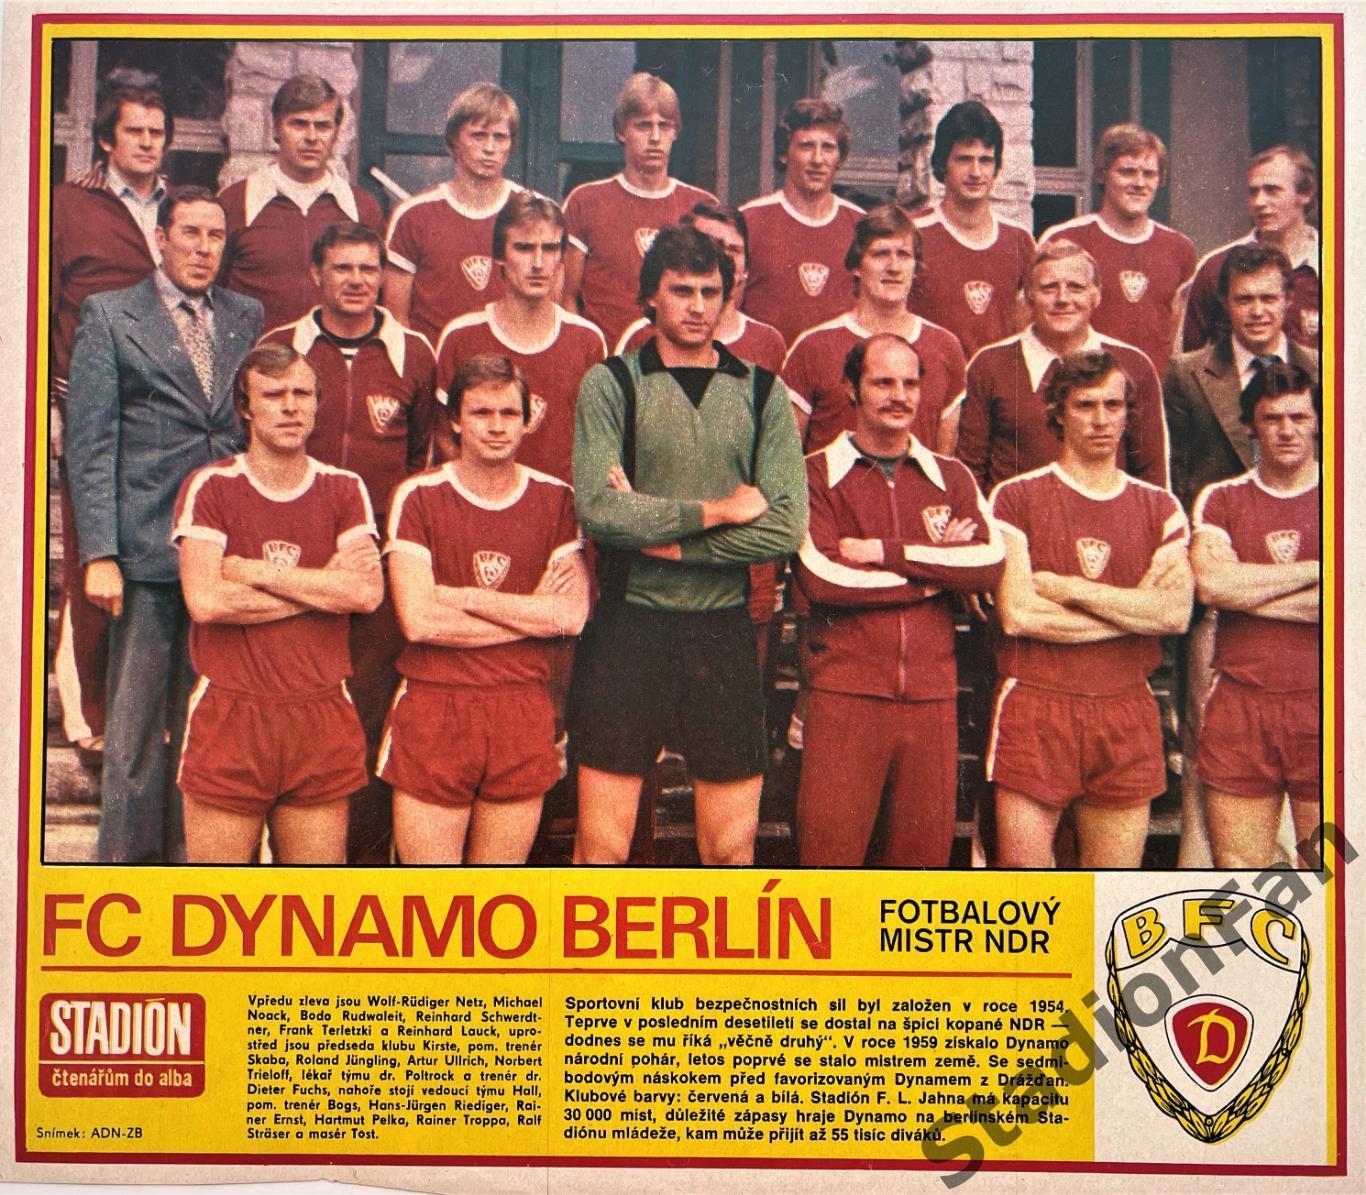 Постер из журнала Стадион (Stadion) - Dynamo Berlin, 1979.